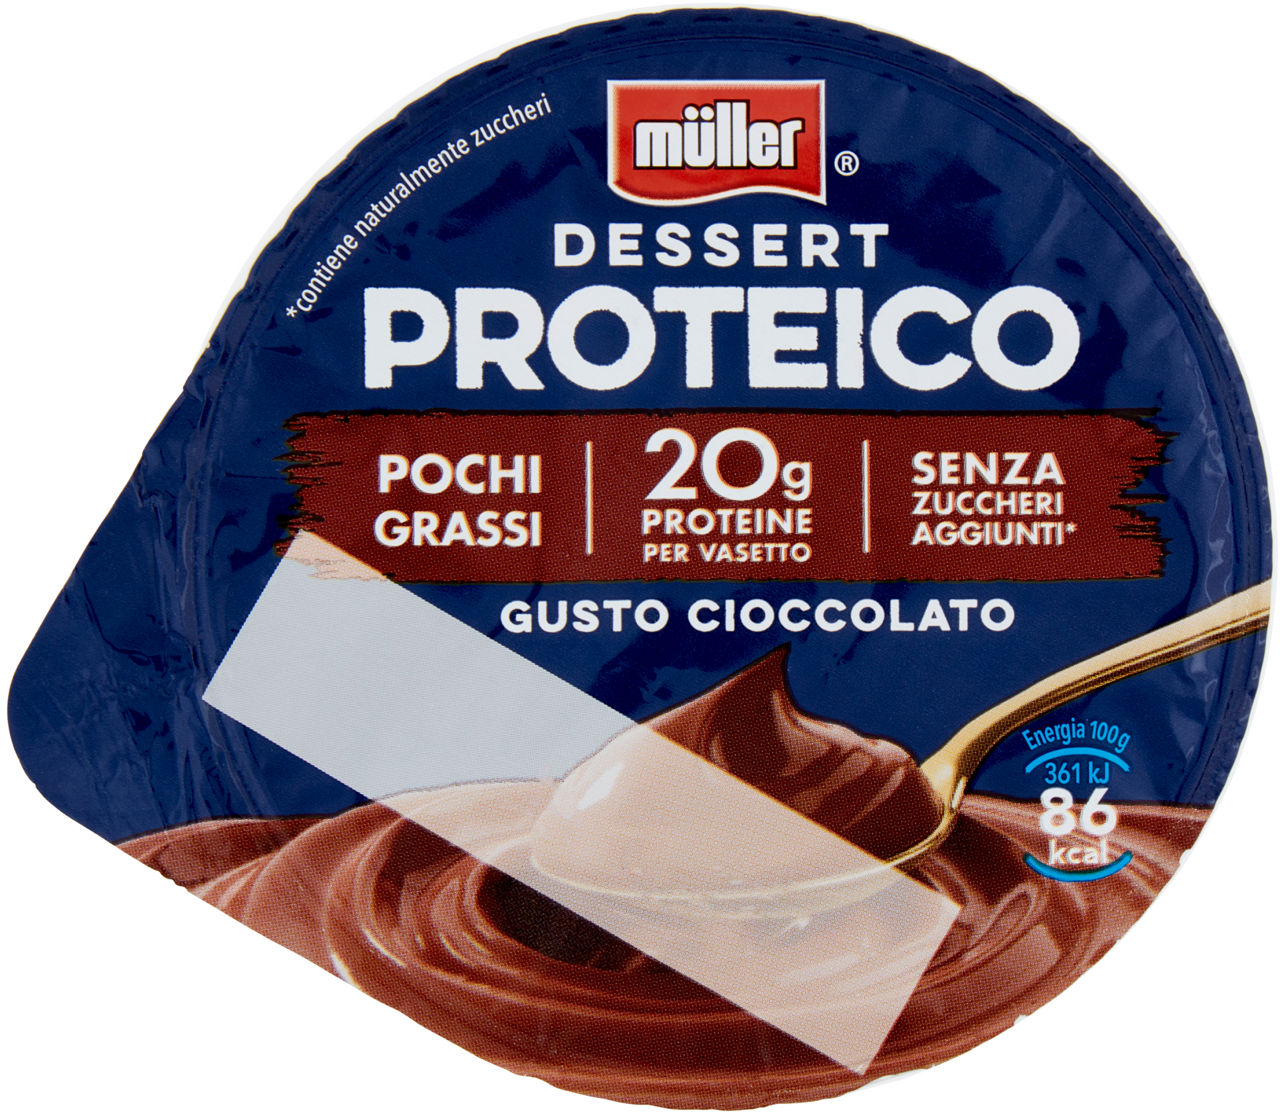 Dessert proteico cioccolato muller g 200